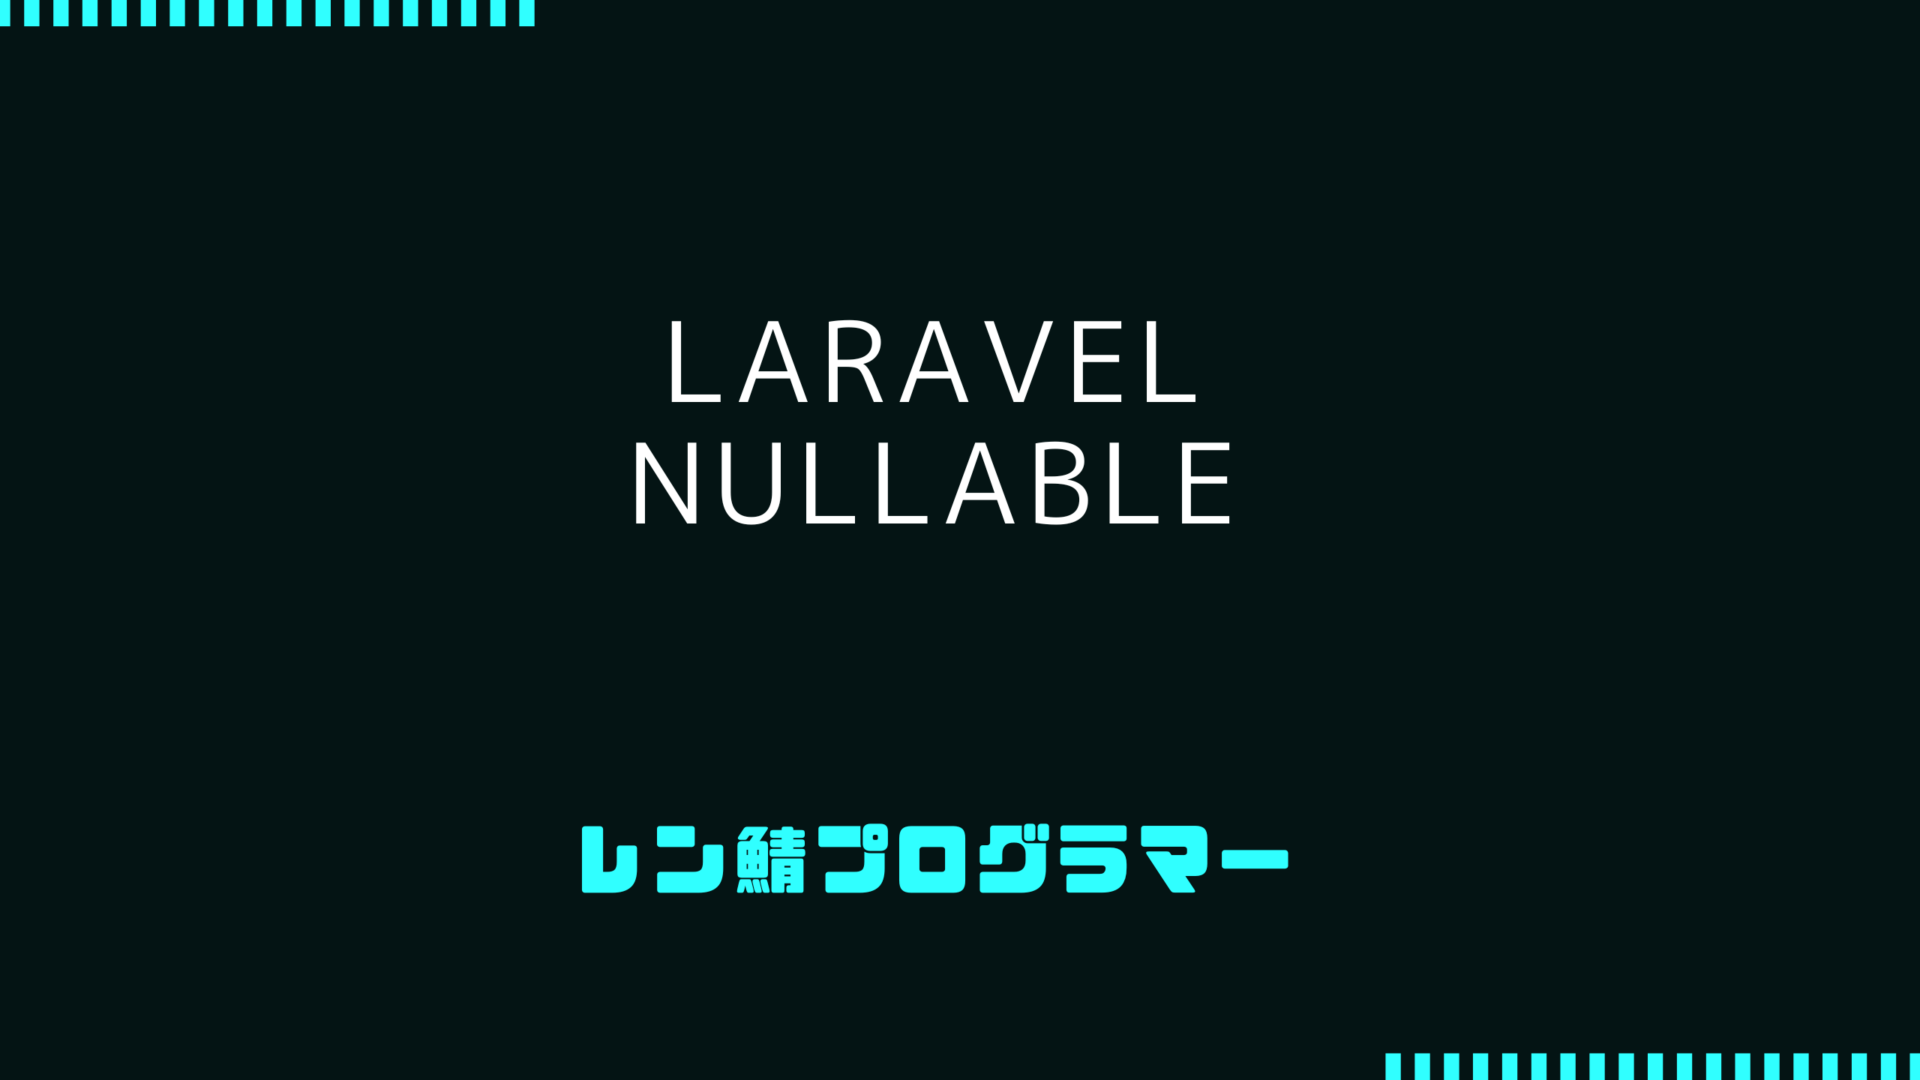 Laravelにおけるnullable属性の利用：空許可を活用するmigrateやバリデーション